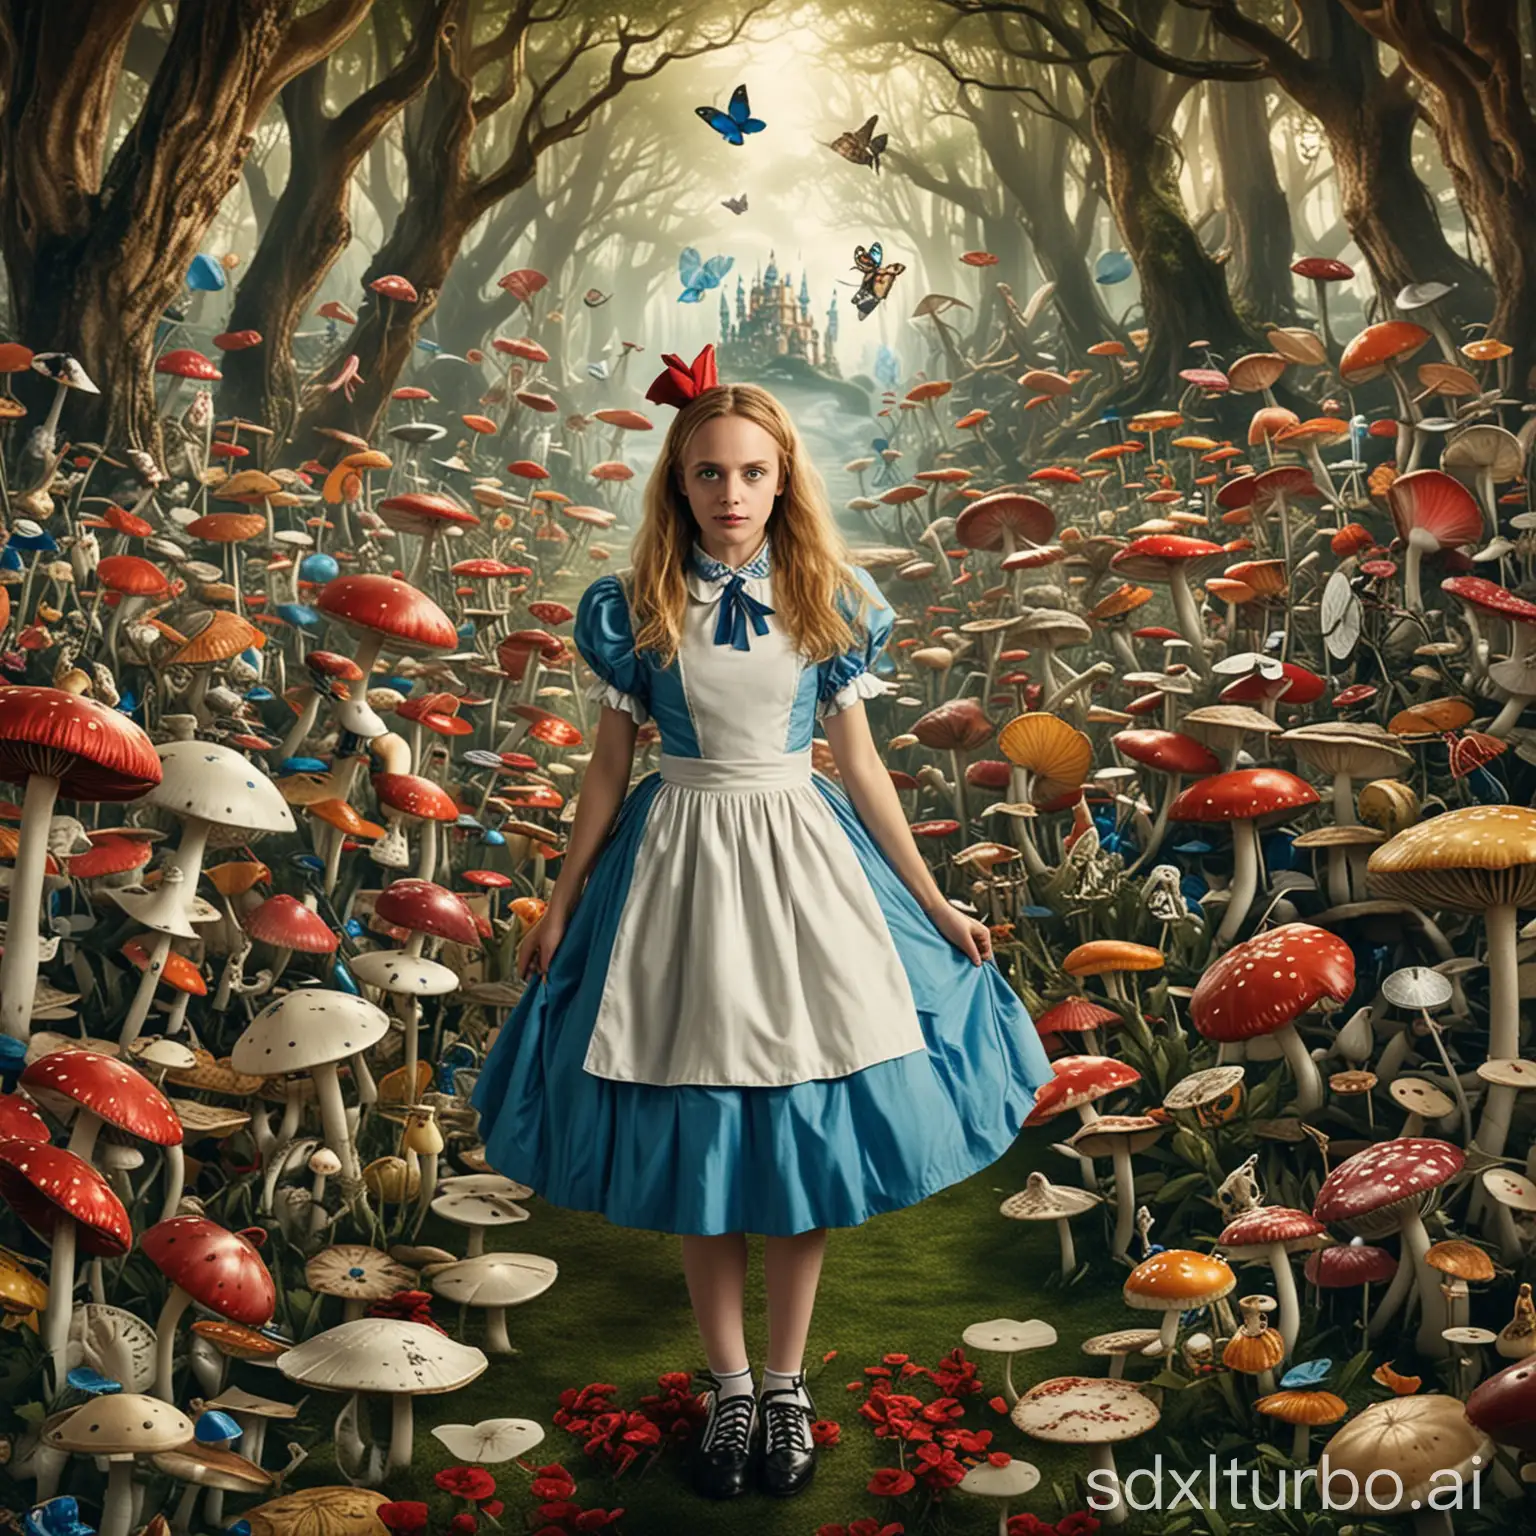 Whimsical-Alice-in-Wonderland-Fantasy-Illustration